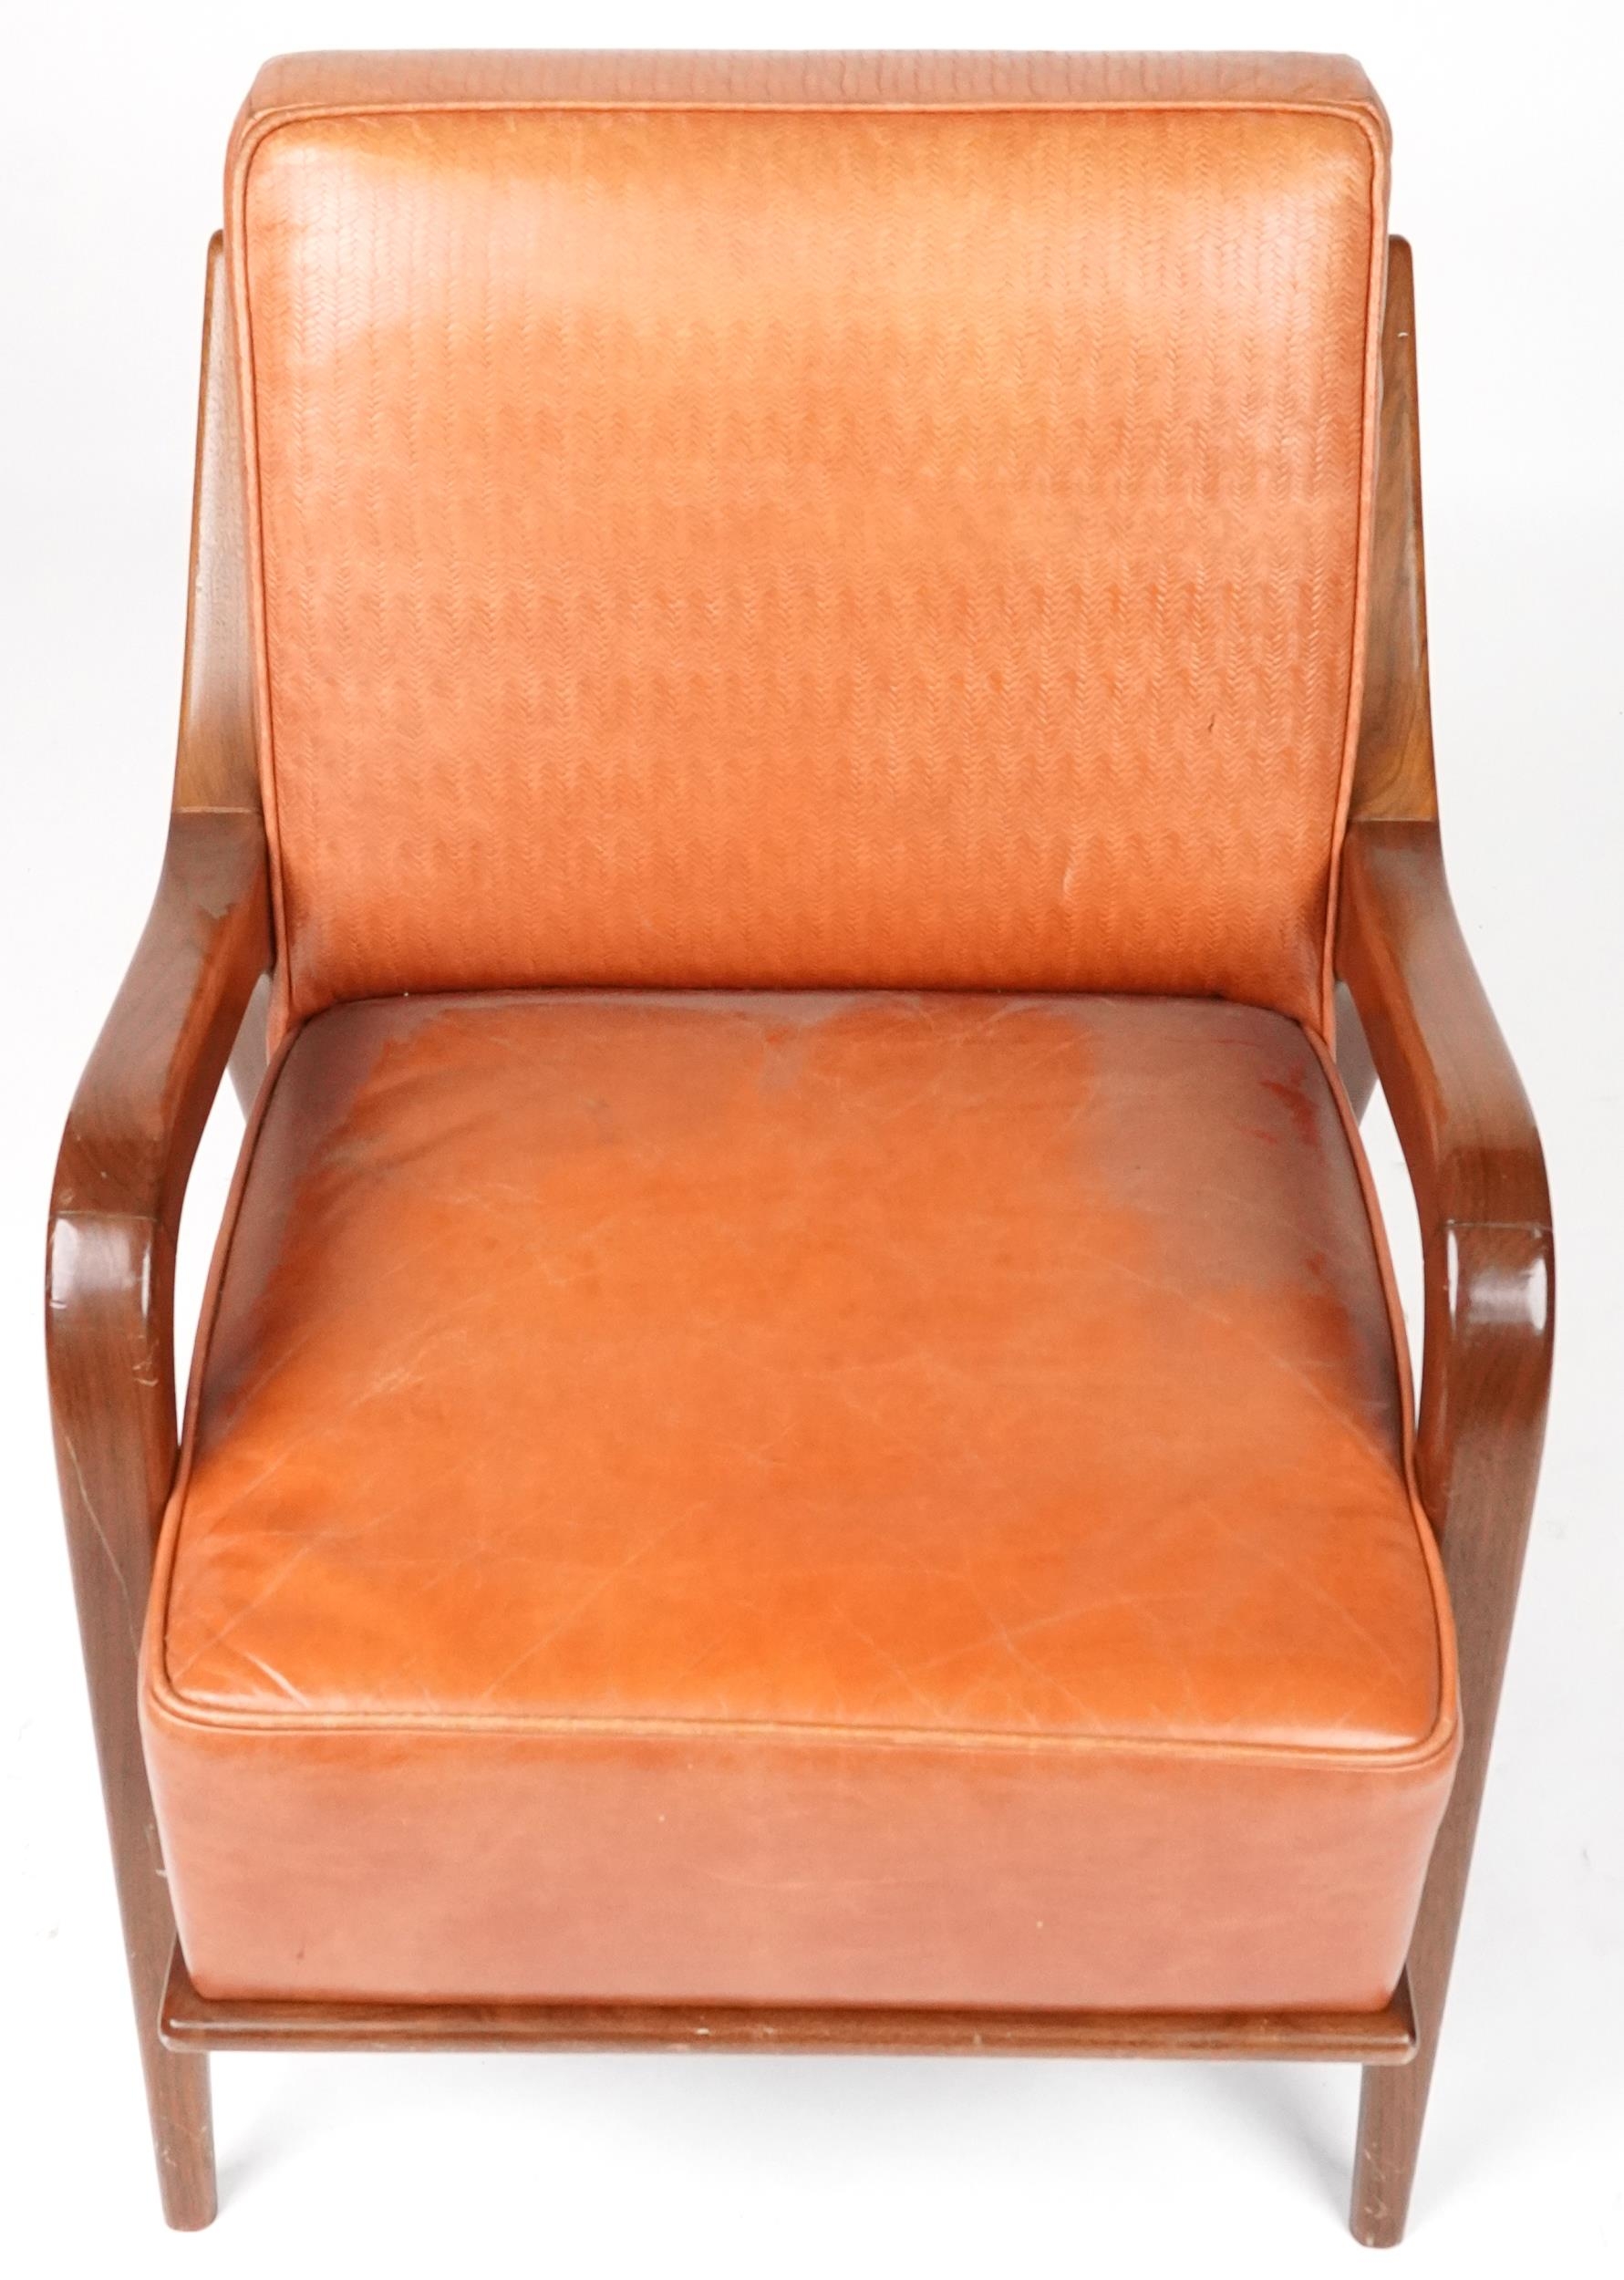 Scandinavian design hardwood lounge chair having tan upholstered back and seat, 86cm H x 62.5cm W - Image 3 of 4